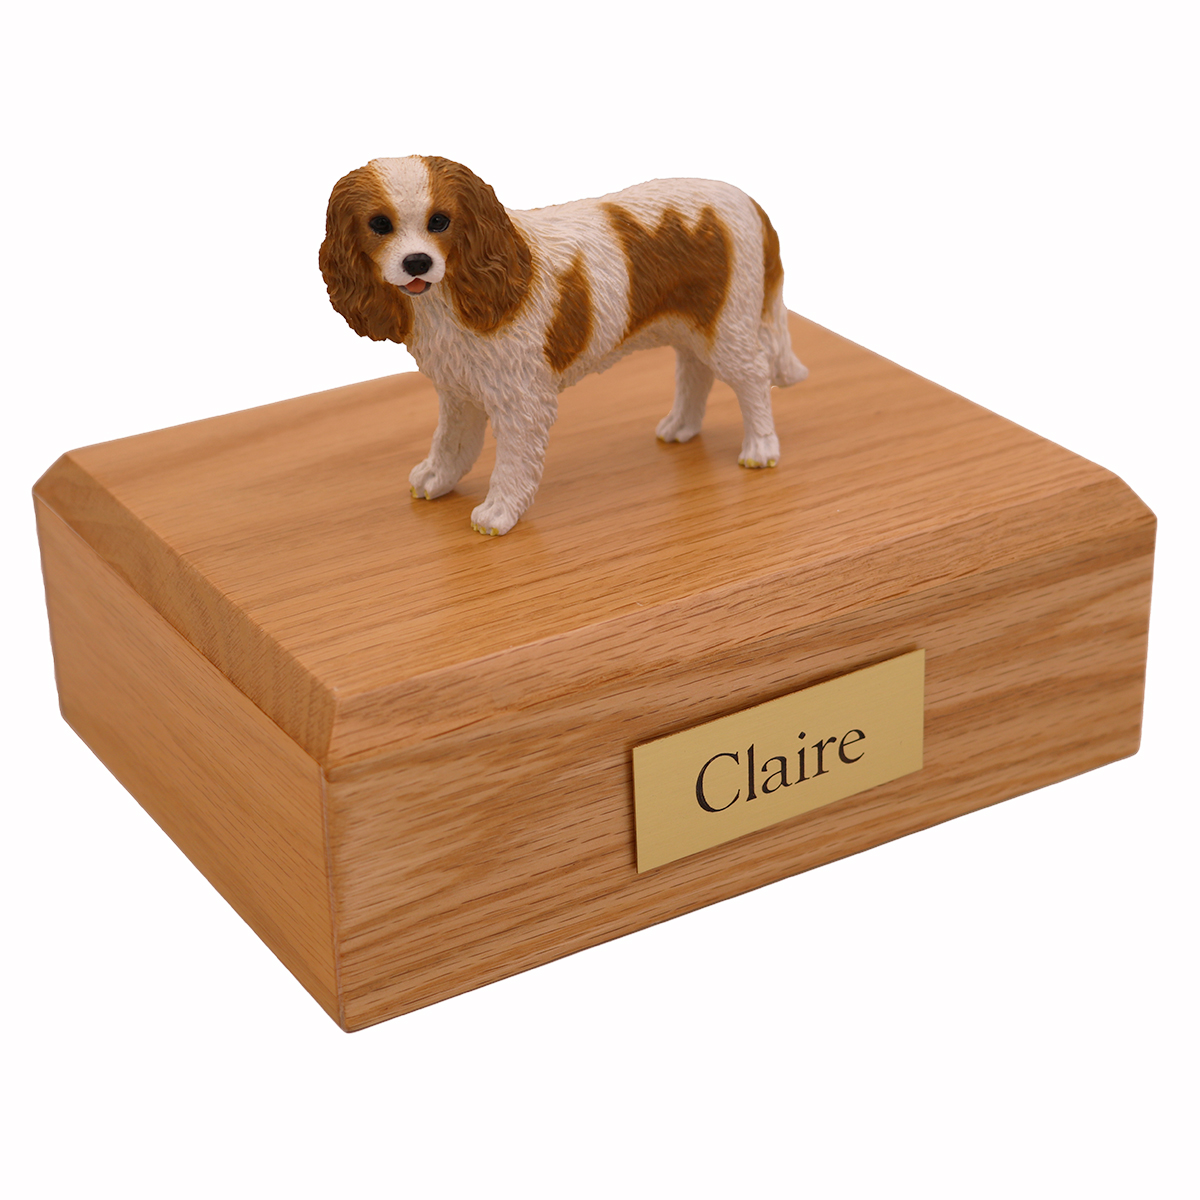 Dog, King Charles Spaniel, Brn/Wht - Figurine Urn